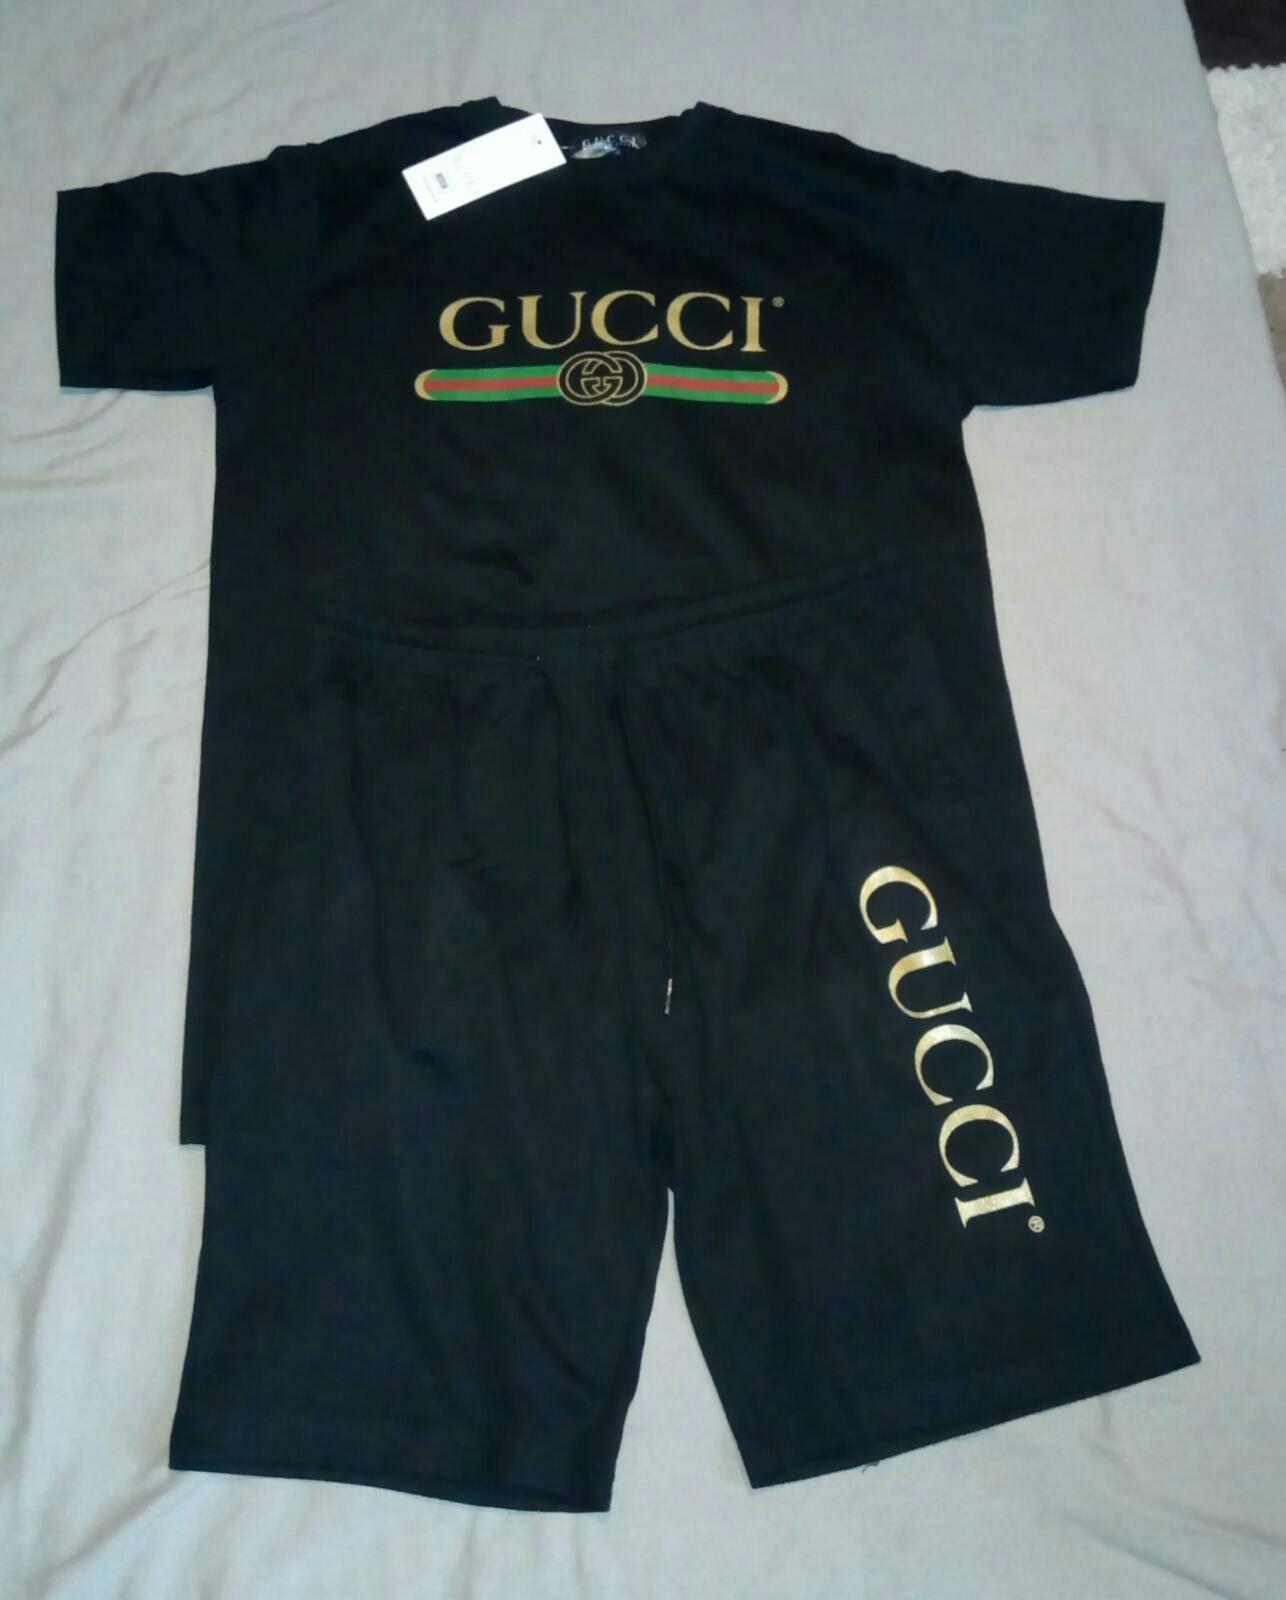 Gucci Clothes For Roblox Buyudum Cocuk Oldum - girl shirts roblox codes rldm